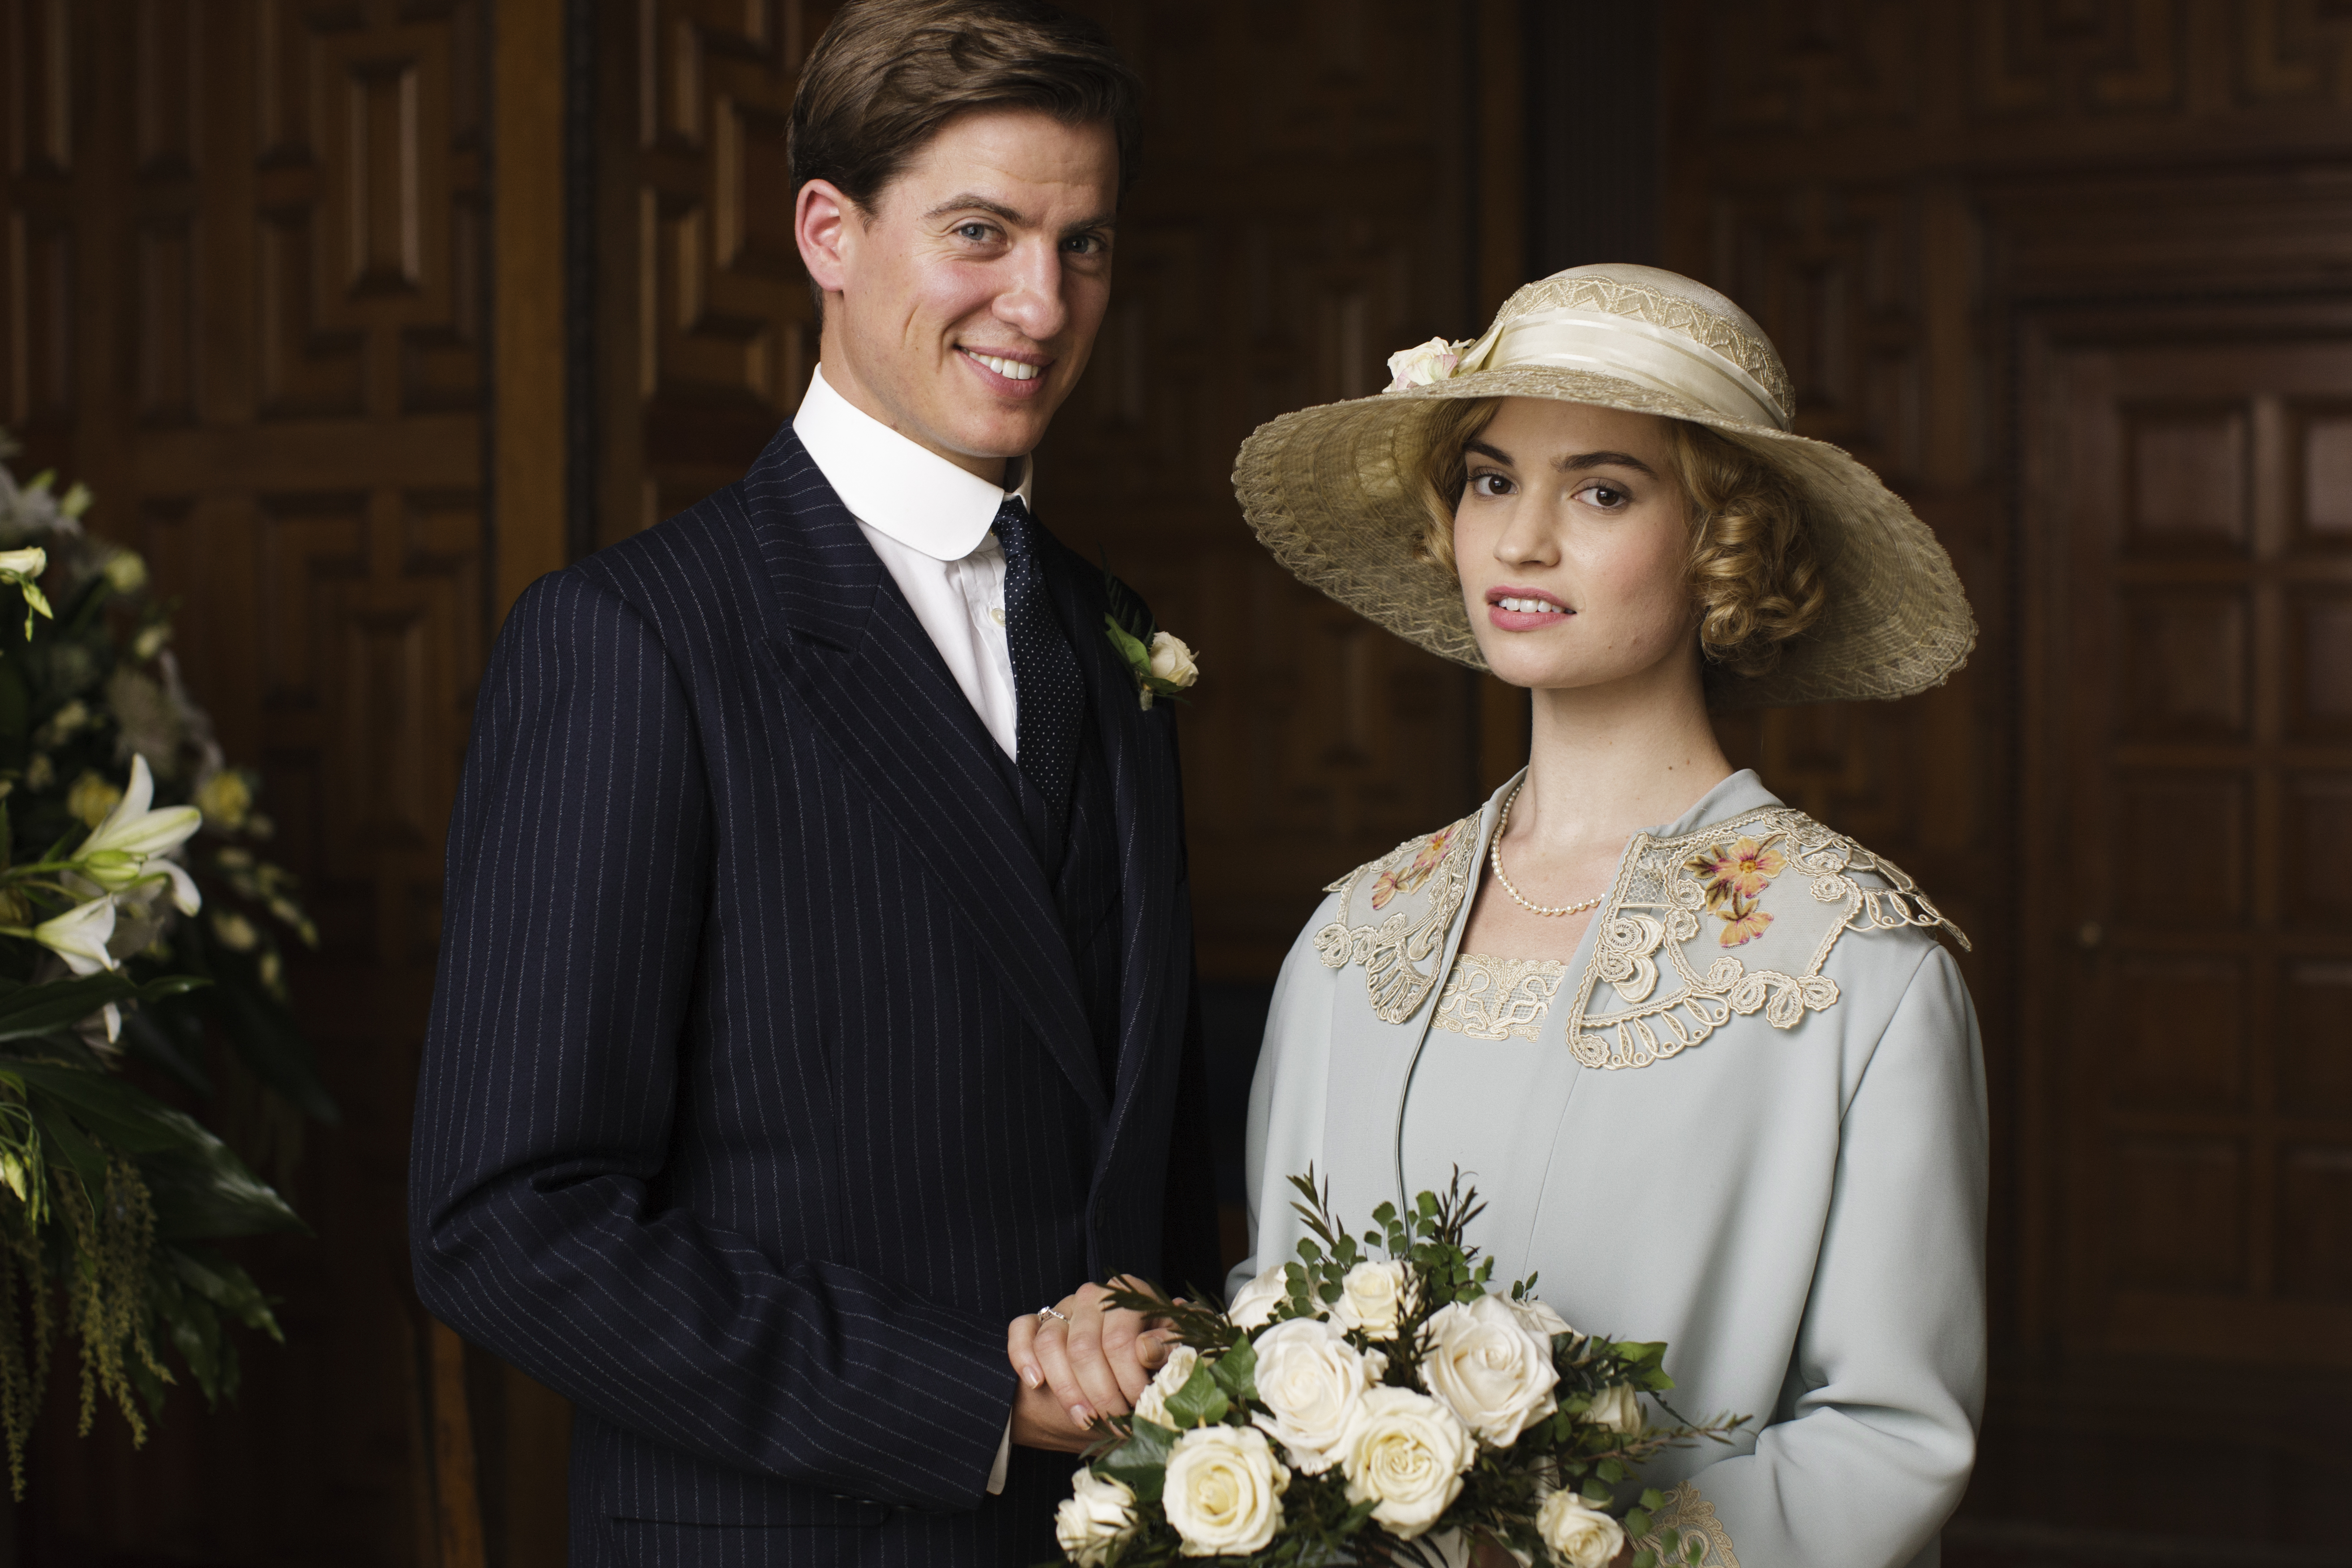 Downton Abbey: Series 5 Finale Trailer